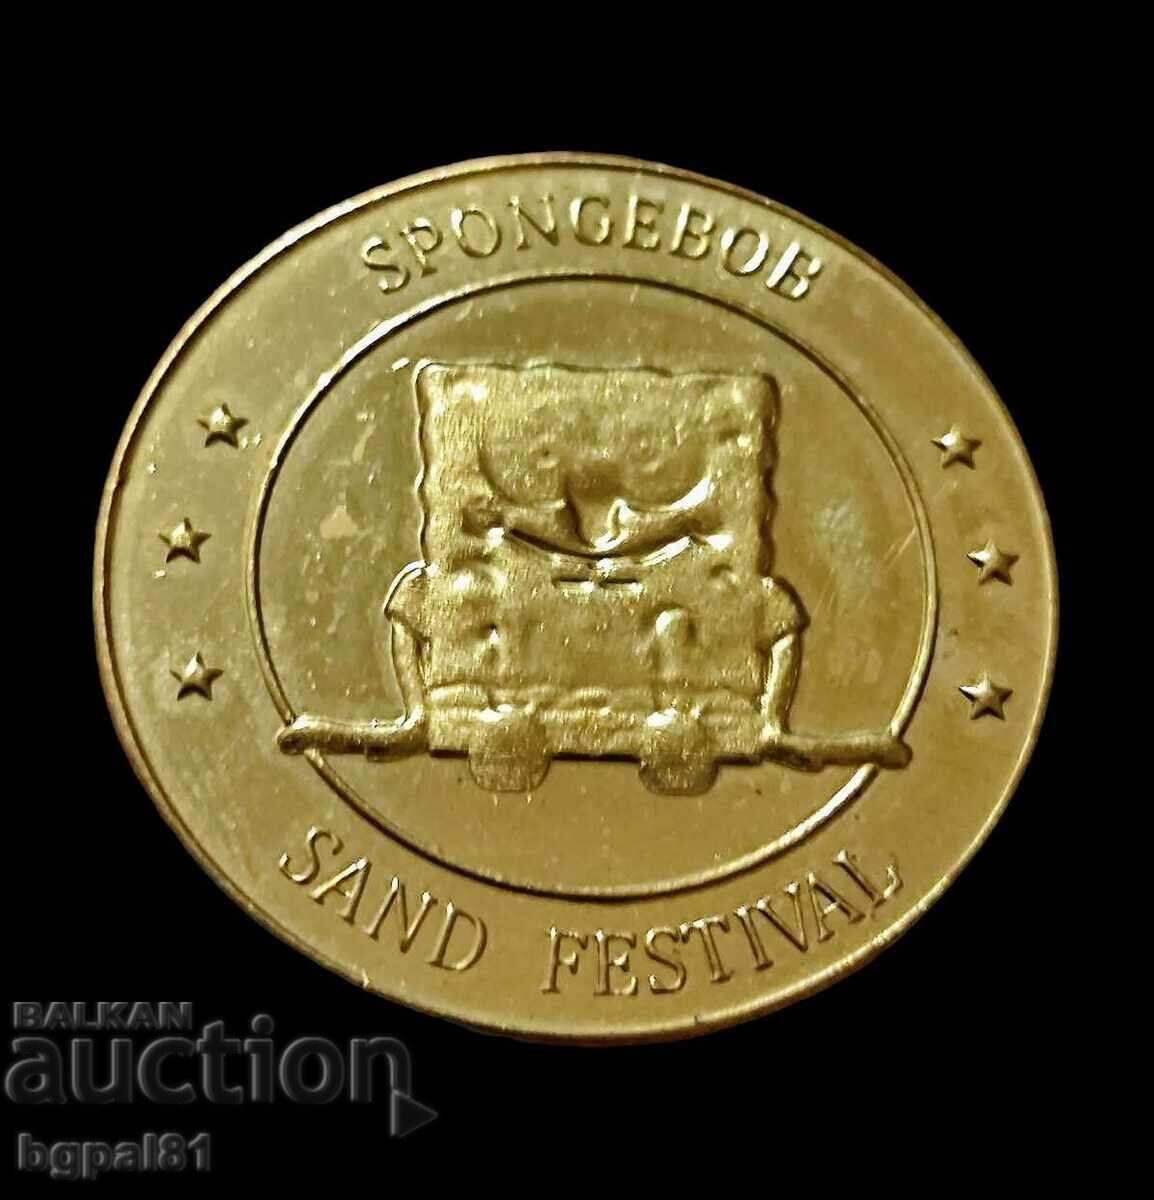 SpongeBob - Medal issue "Bulgarian legacy"